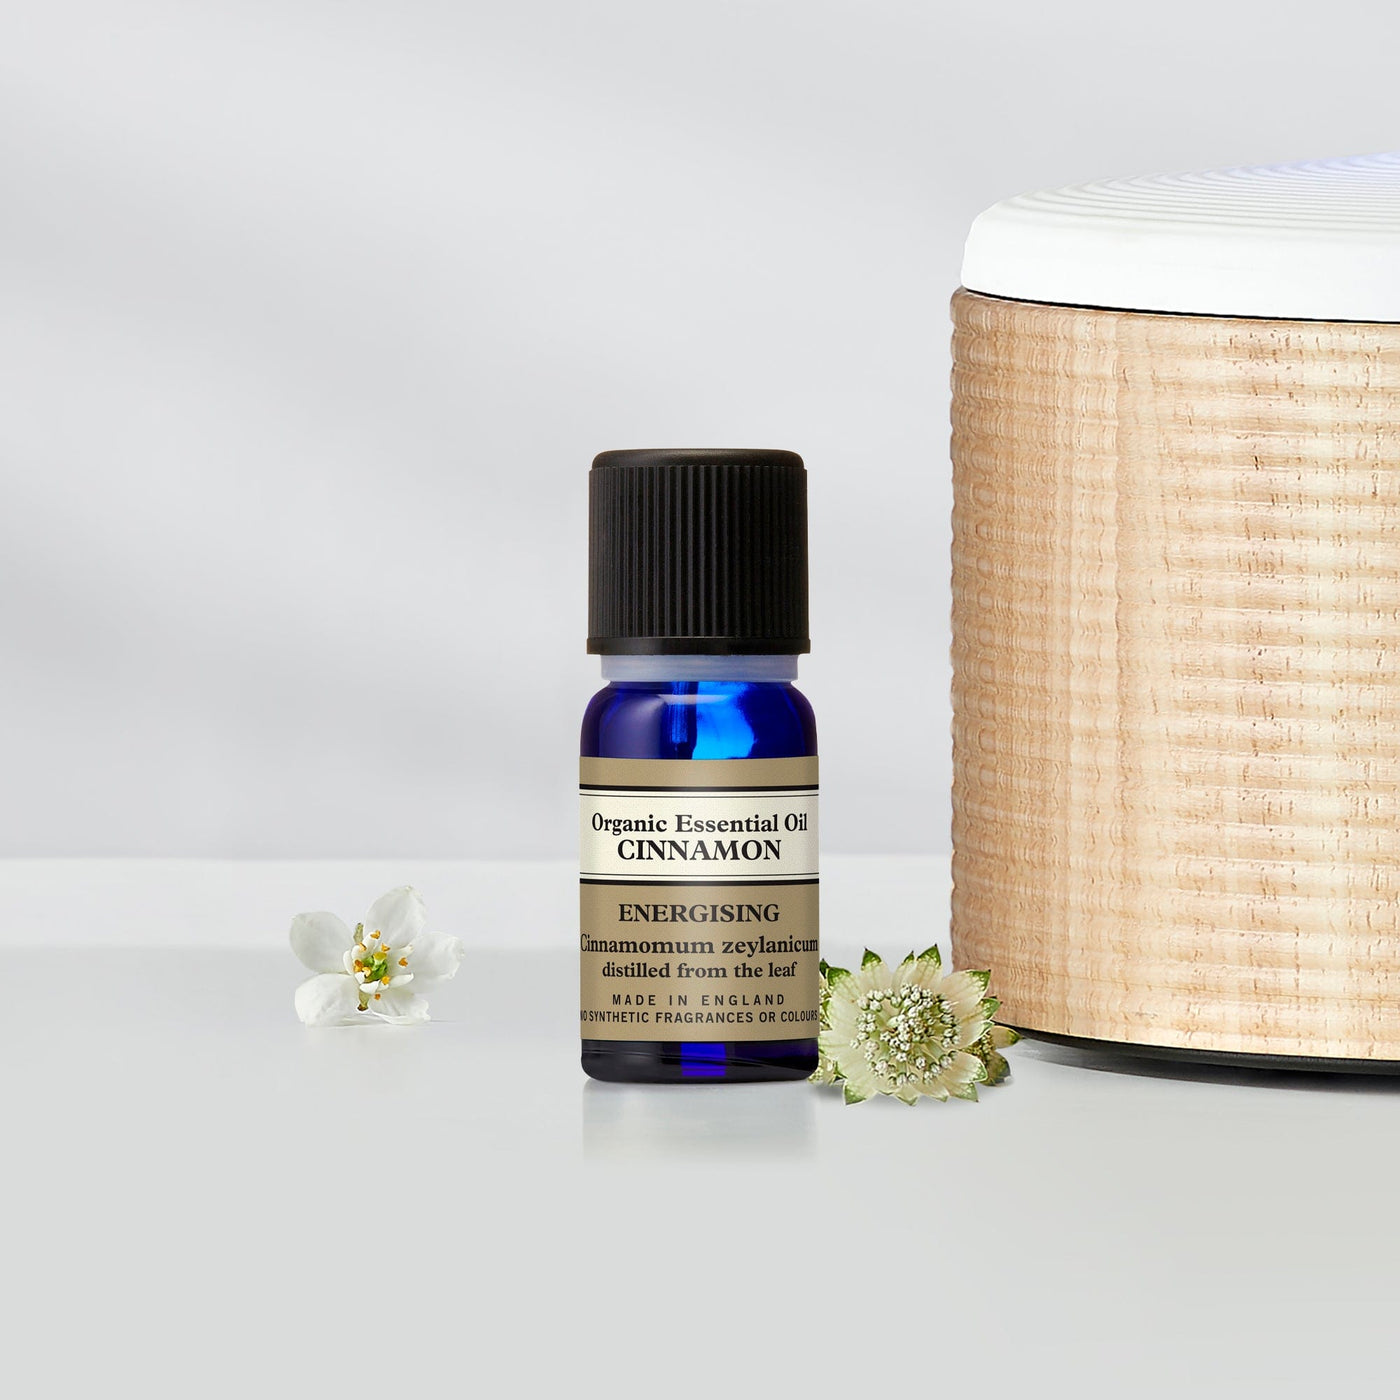 Neal's Yard Remedies Aromatherapy Cinnamon Organic Essential Oil 0.34 fl. oz